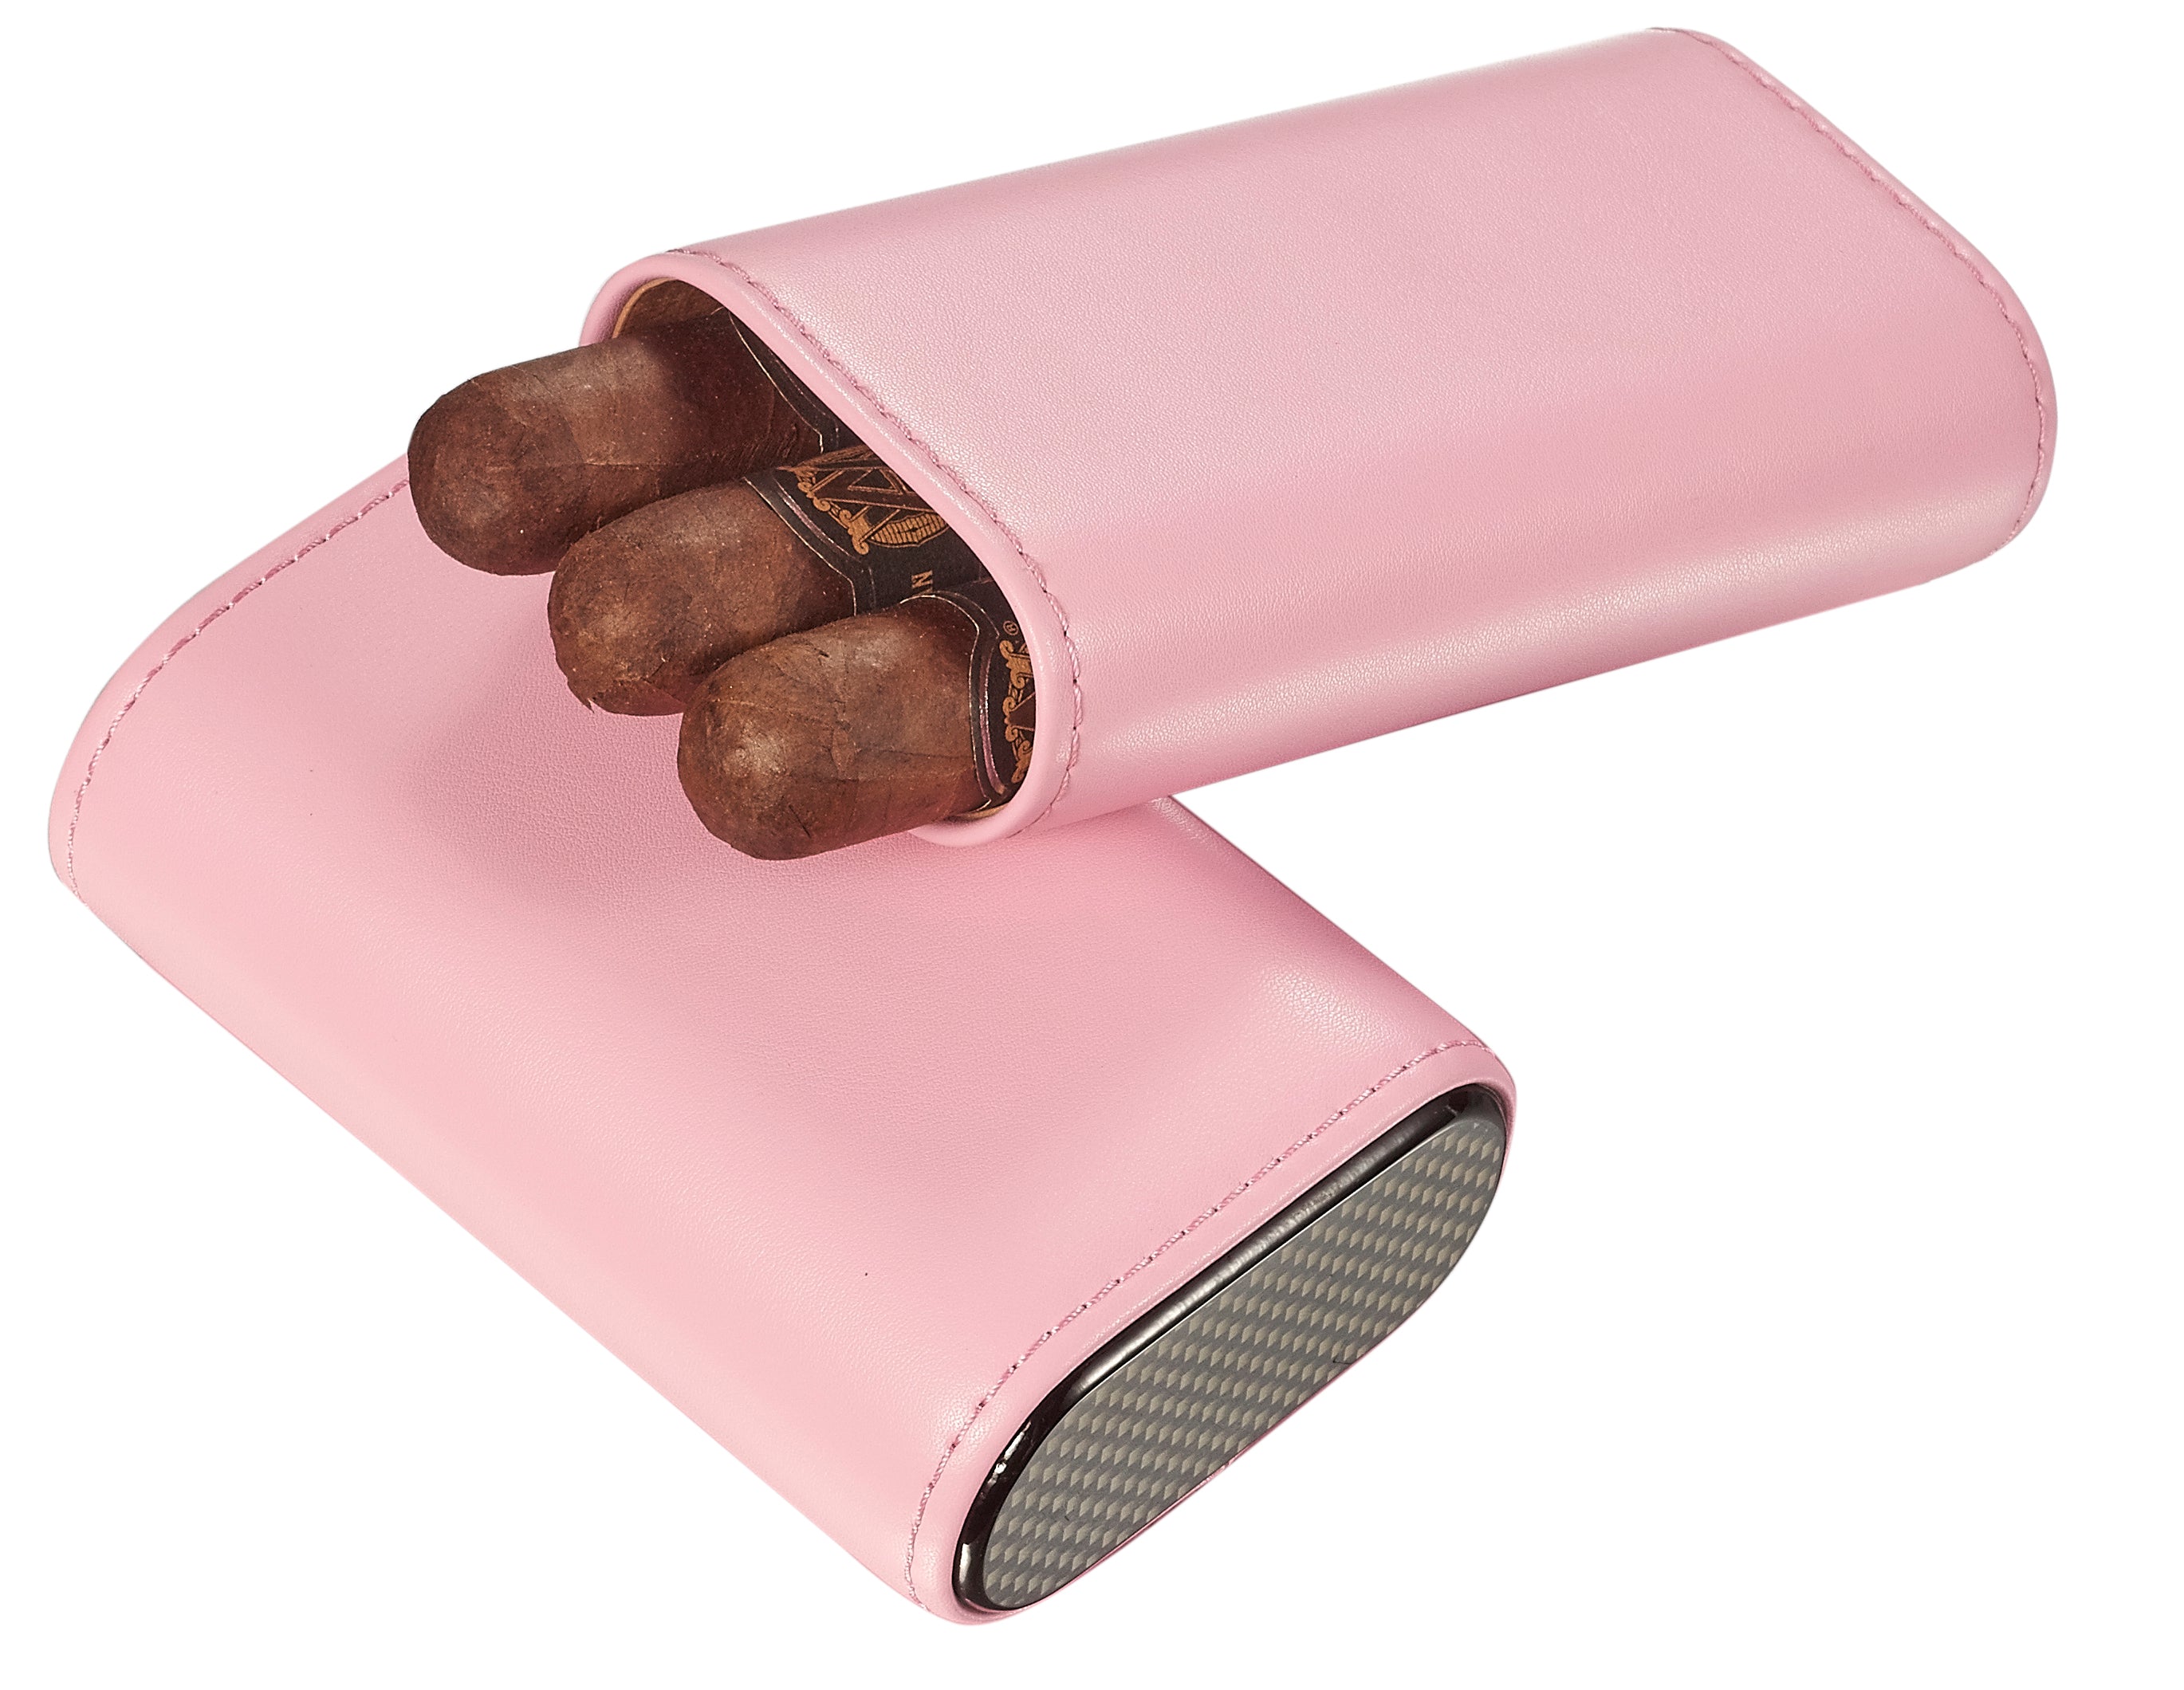 Visol Granada Brown Leather 3 Finger Cigar Case with Cigar Cutter